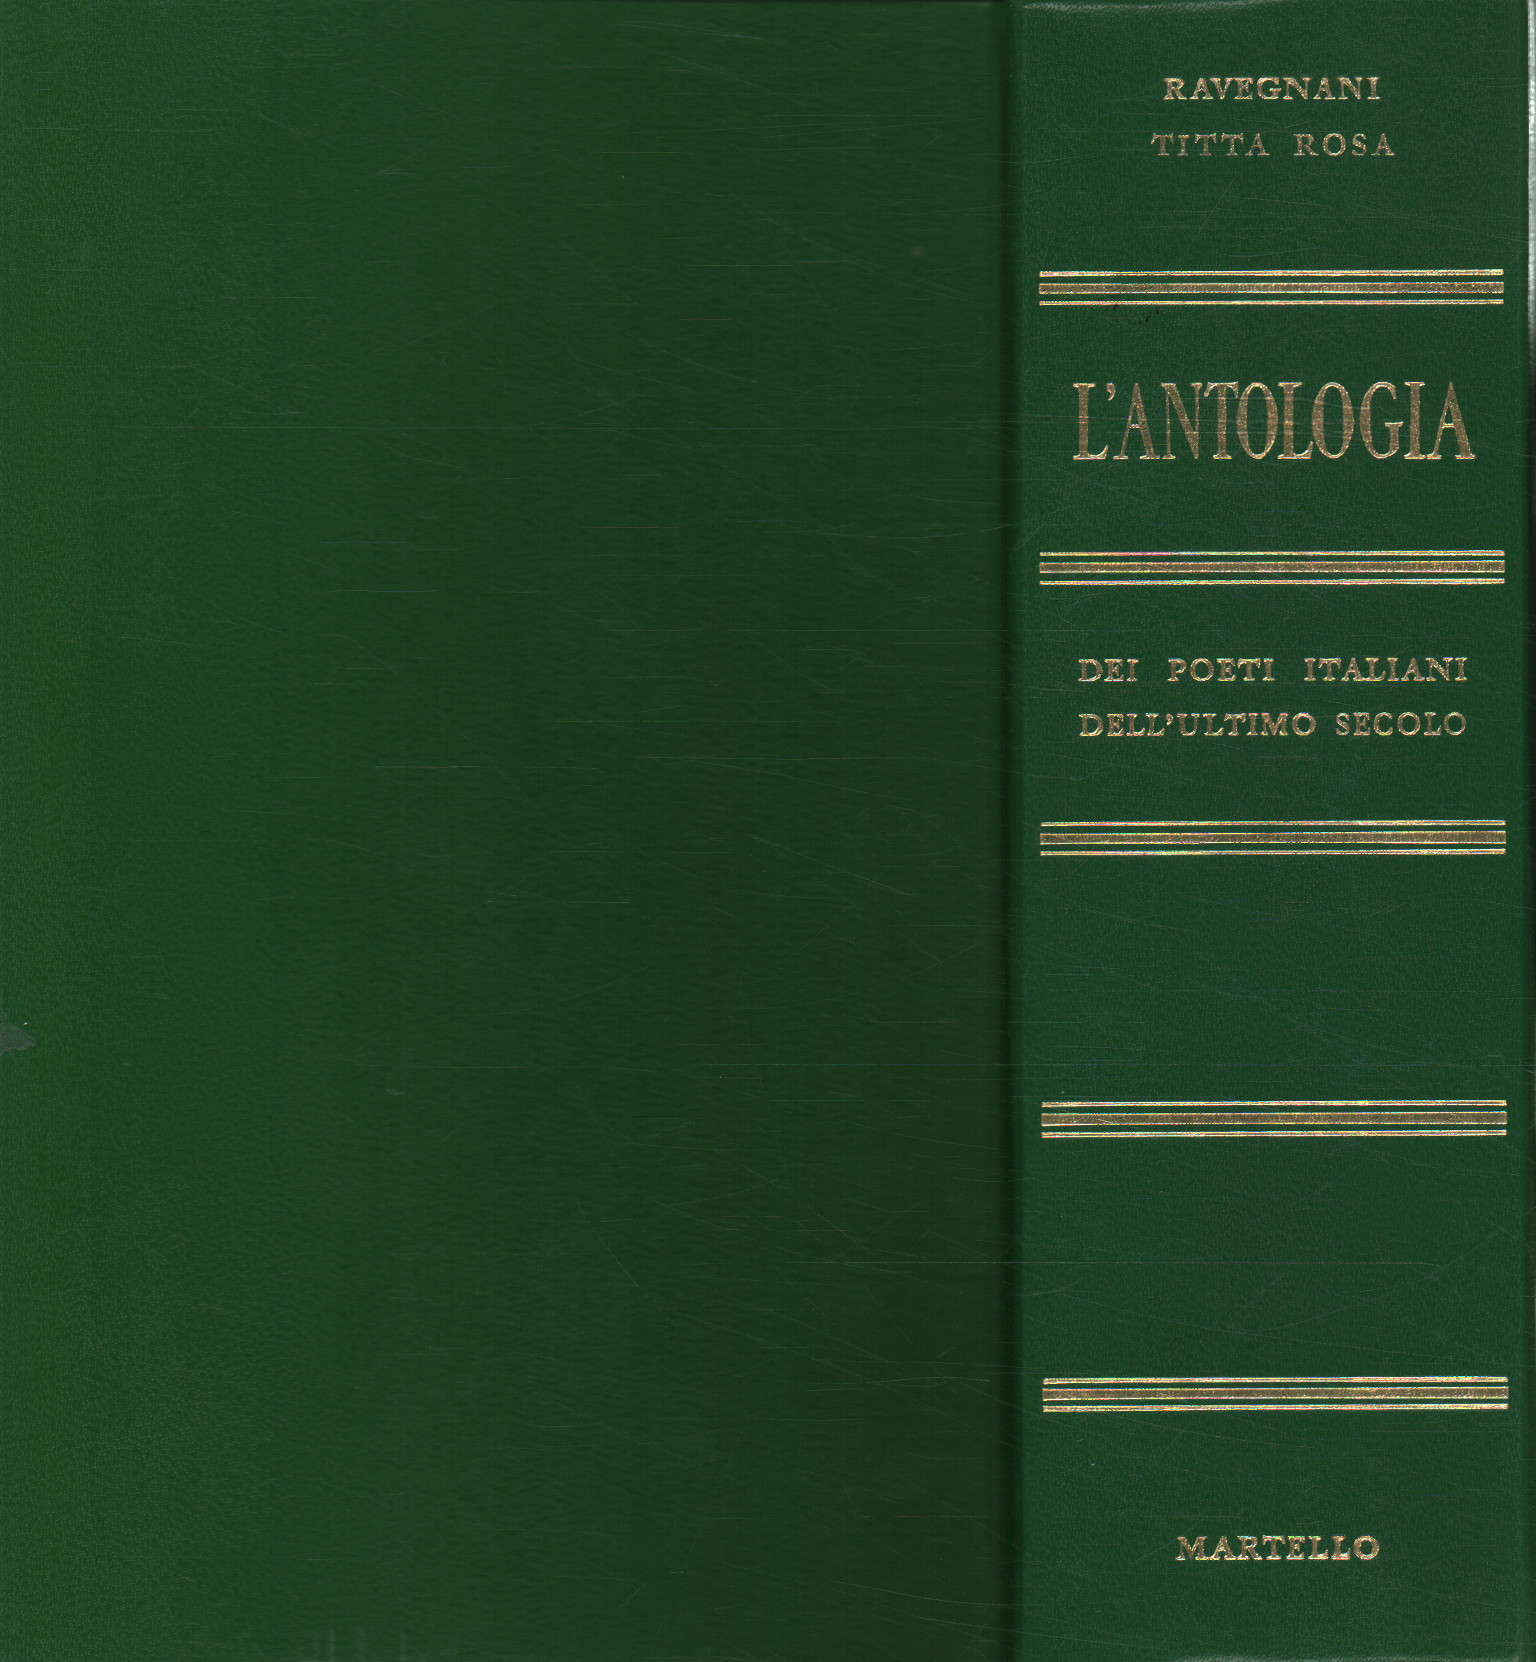 The anthology of the Italian poets of the last century, Giuseppe Ravegnani Giovanni Titta Rosa